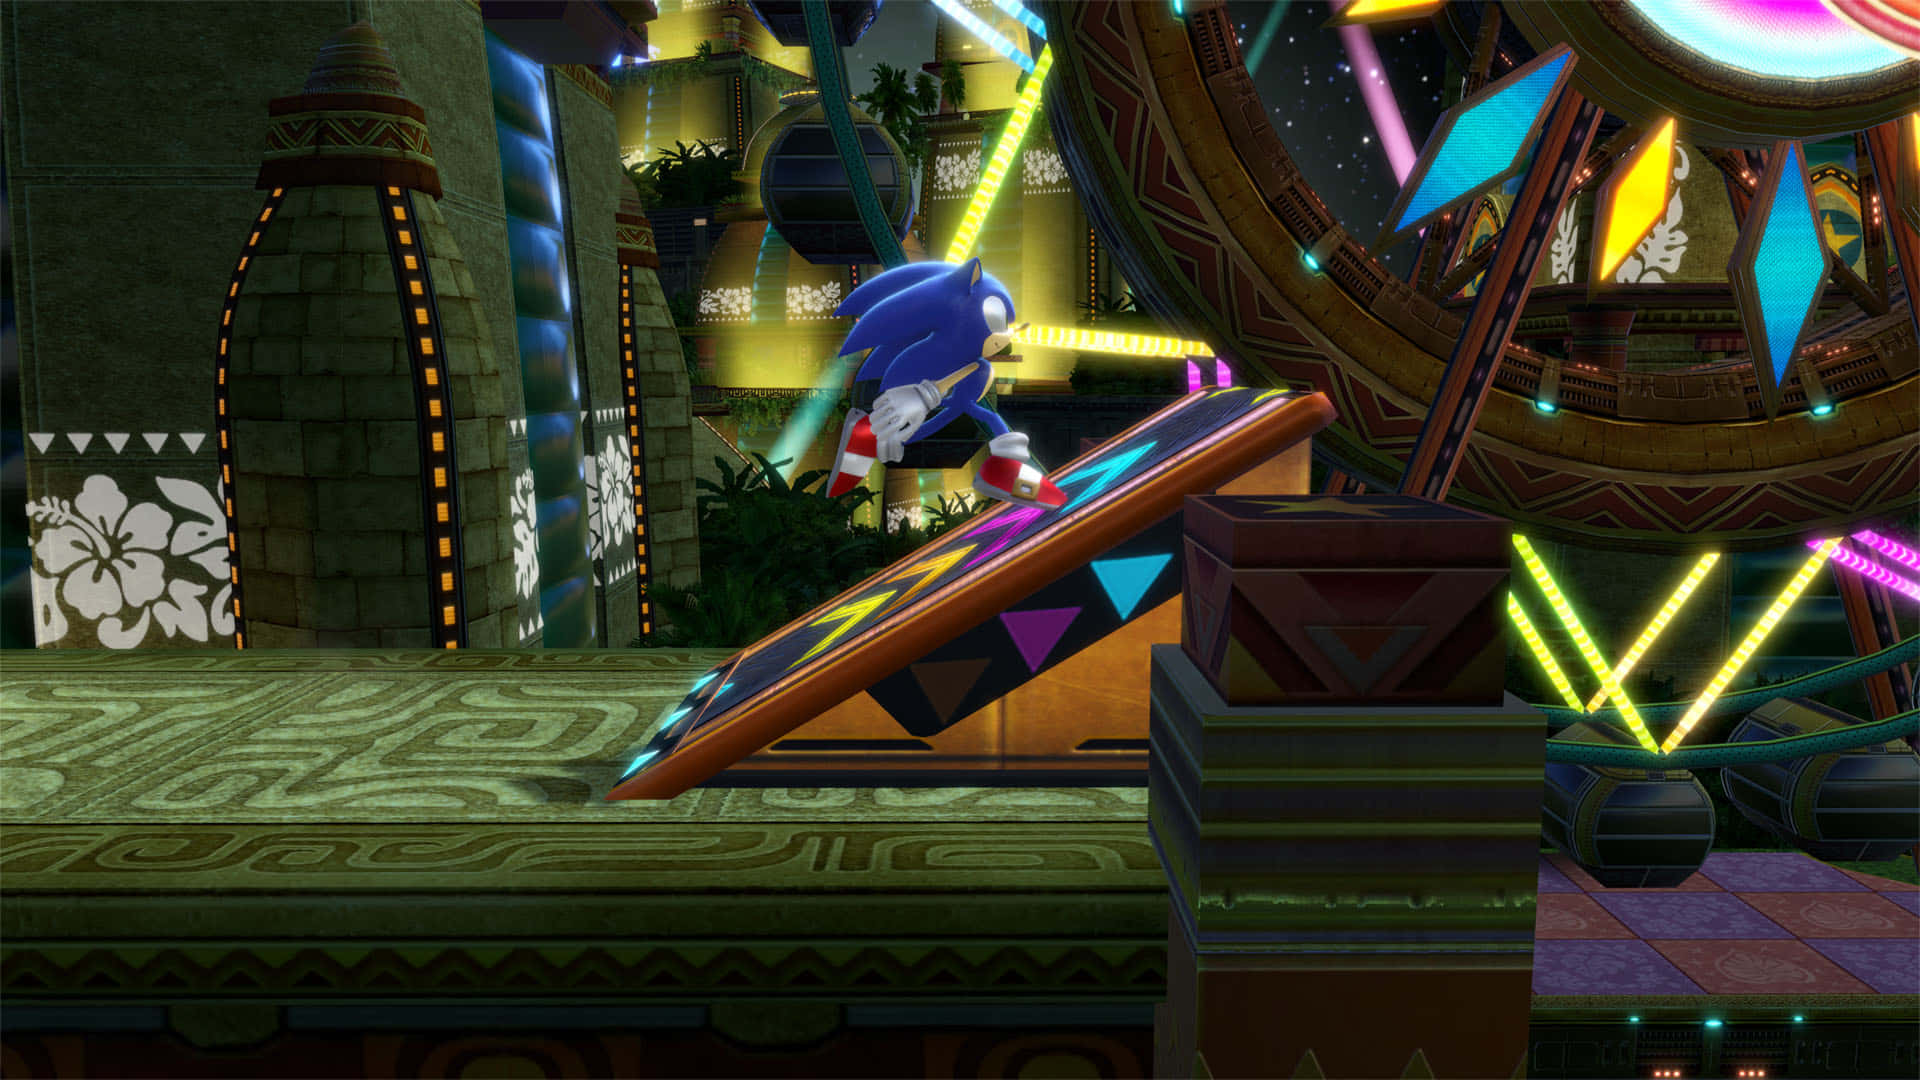 Sonic the Hedgehog exploring the vibrant Planet Wisp Wallpaper